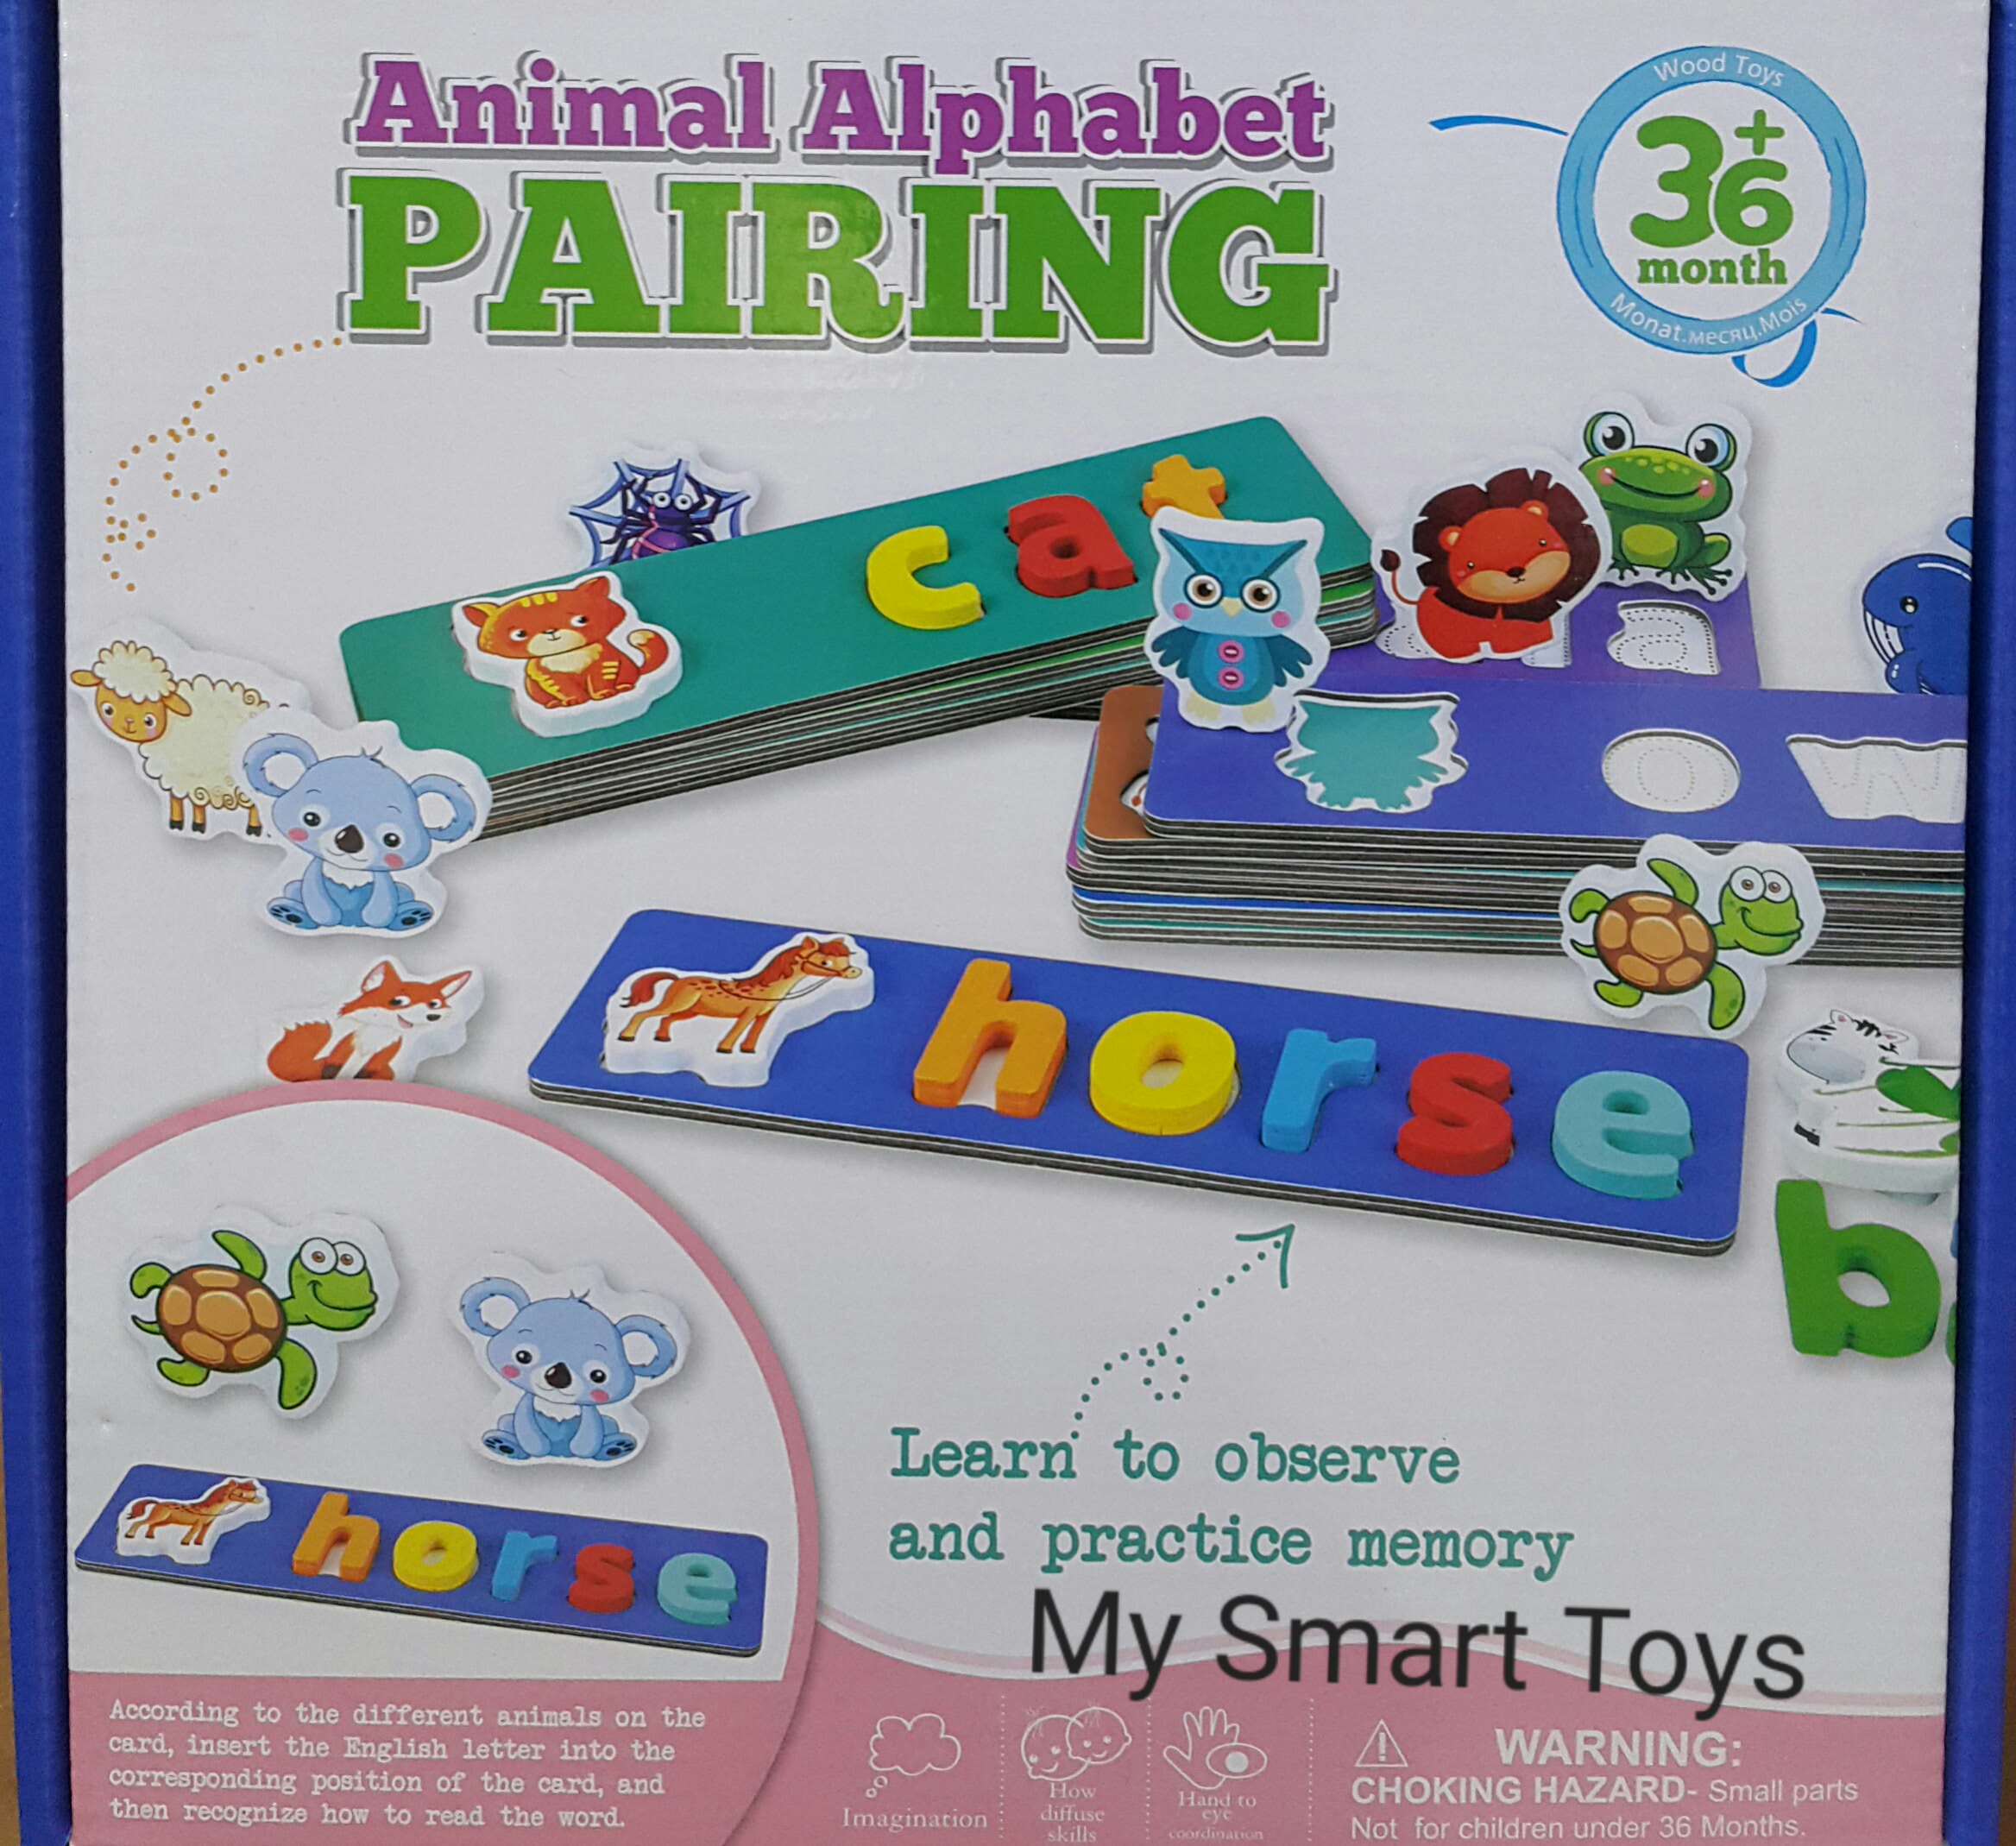 Animal Alphabet Pairing – my smart toys